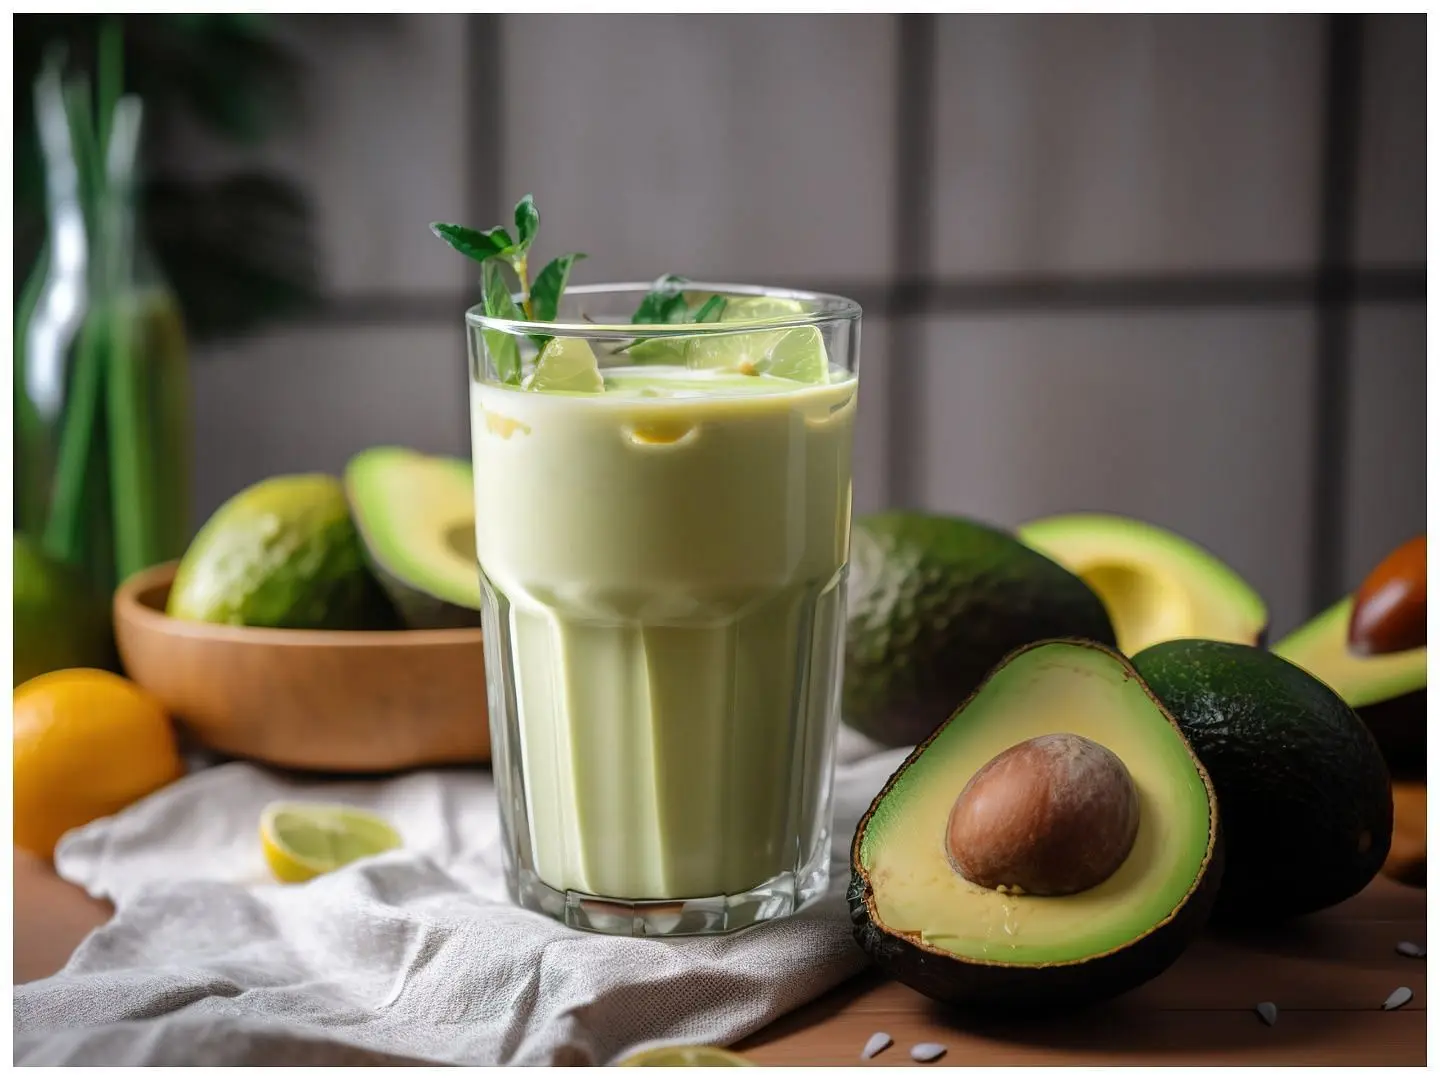 Avocado adds creaminess to this smoothie (Image via Vecteezy)